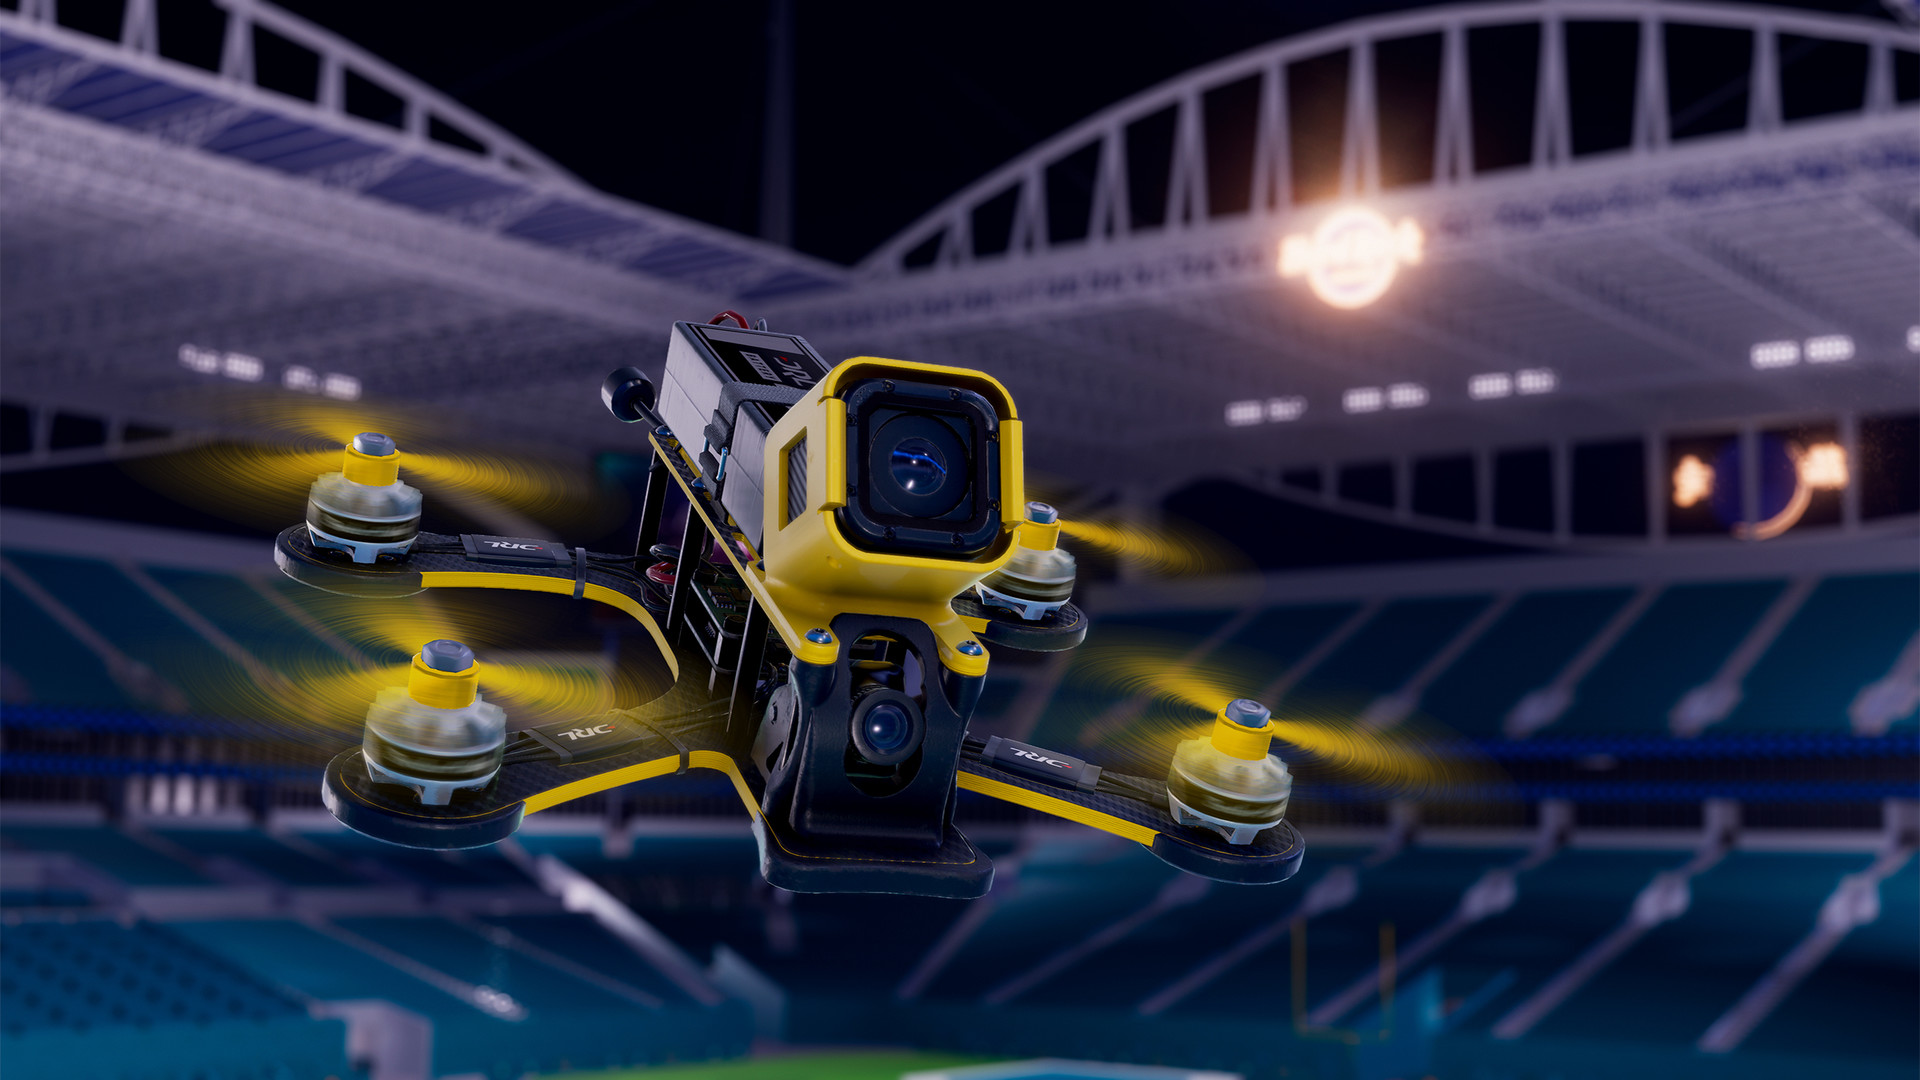 the drone racing league simulator controller